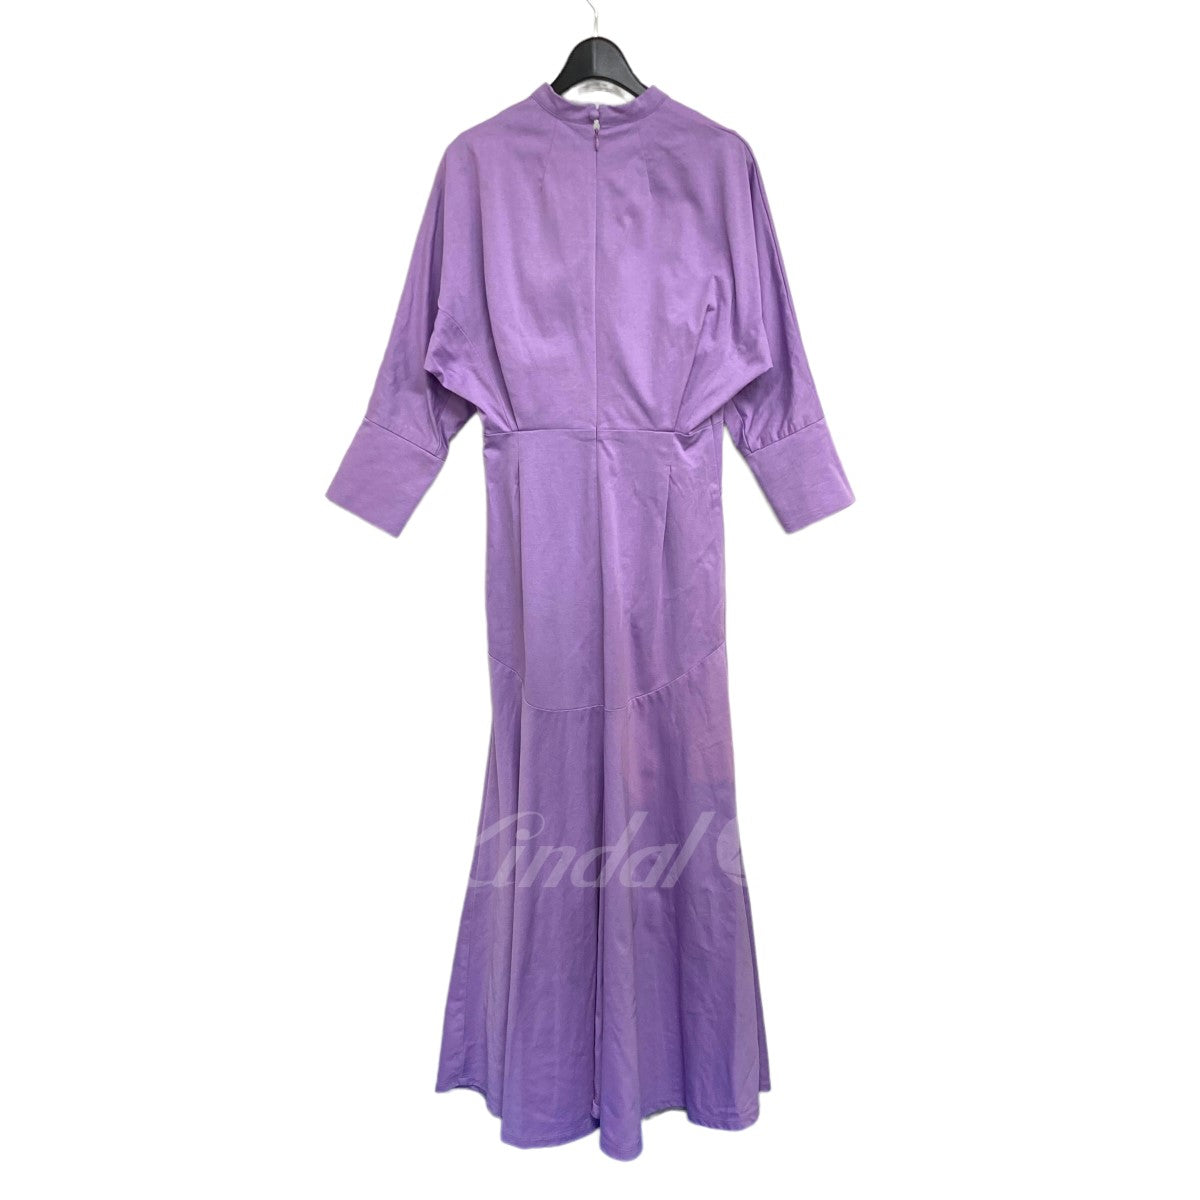 mame kurogouchi(マメ クロゴウチ) 「Cotton Jersey Dress」 三越 ...